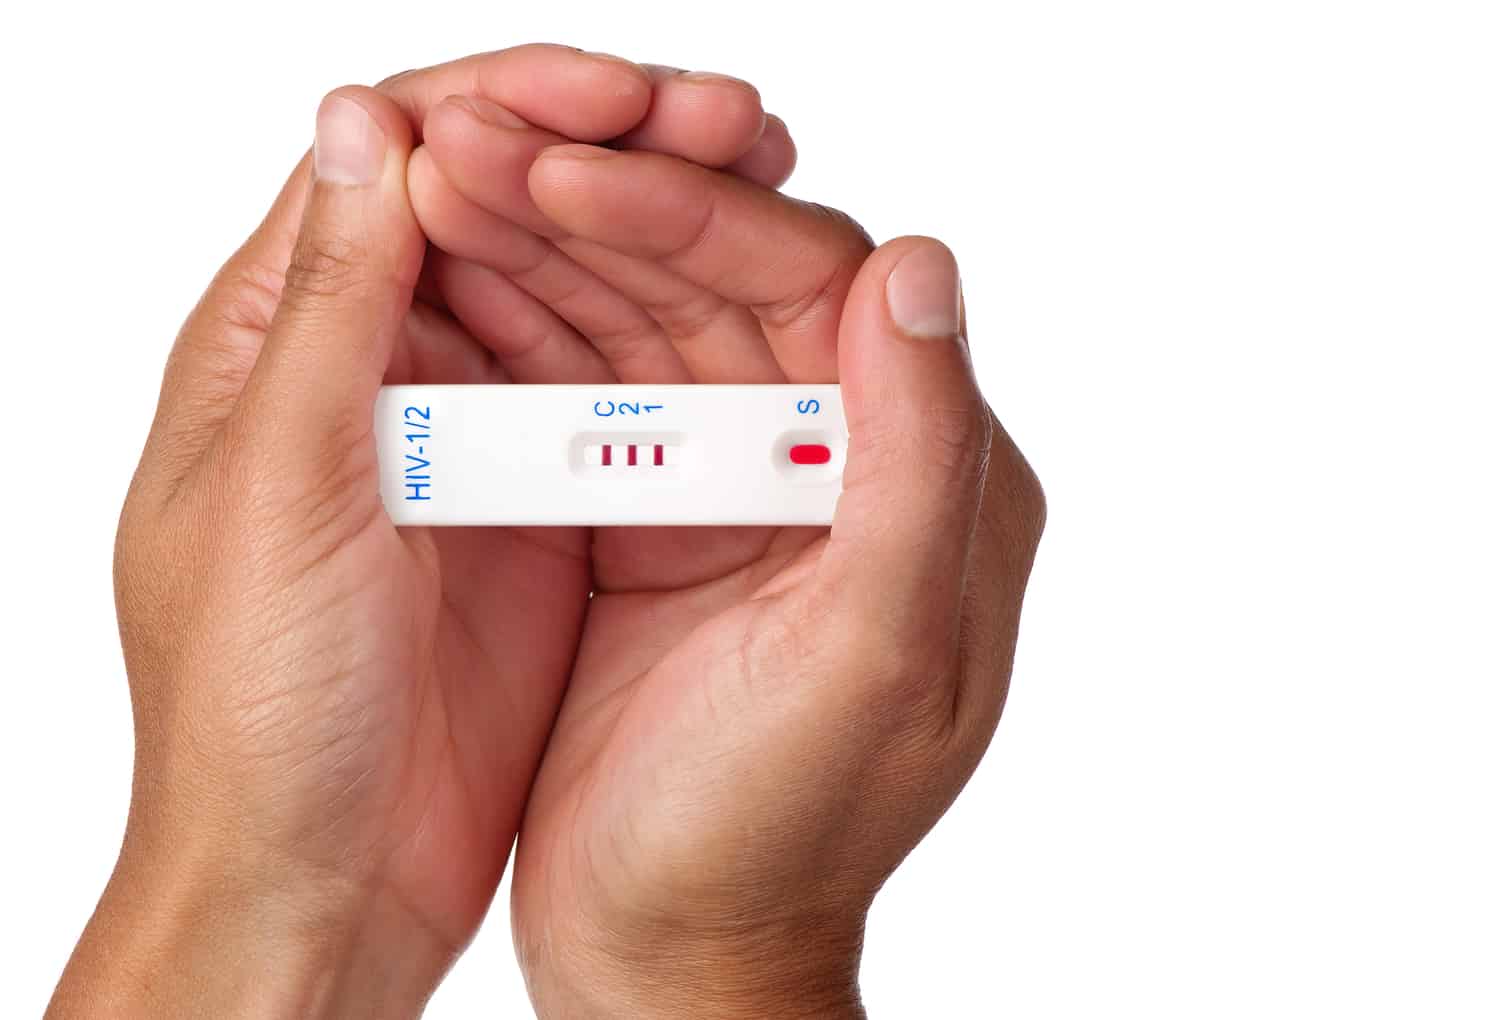 holding a HIV test stick